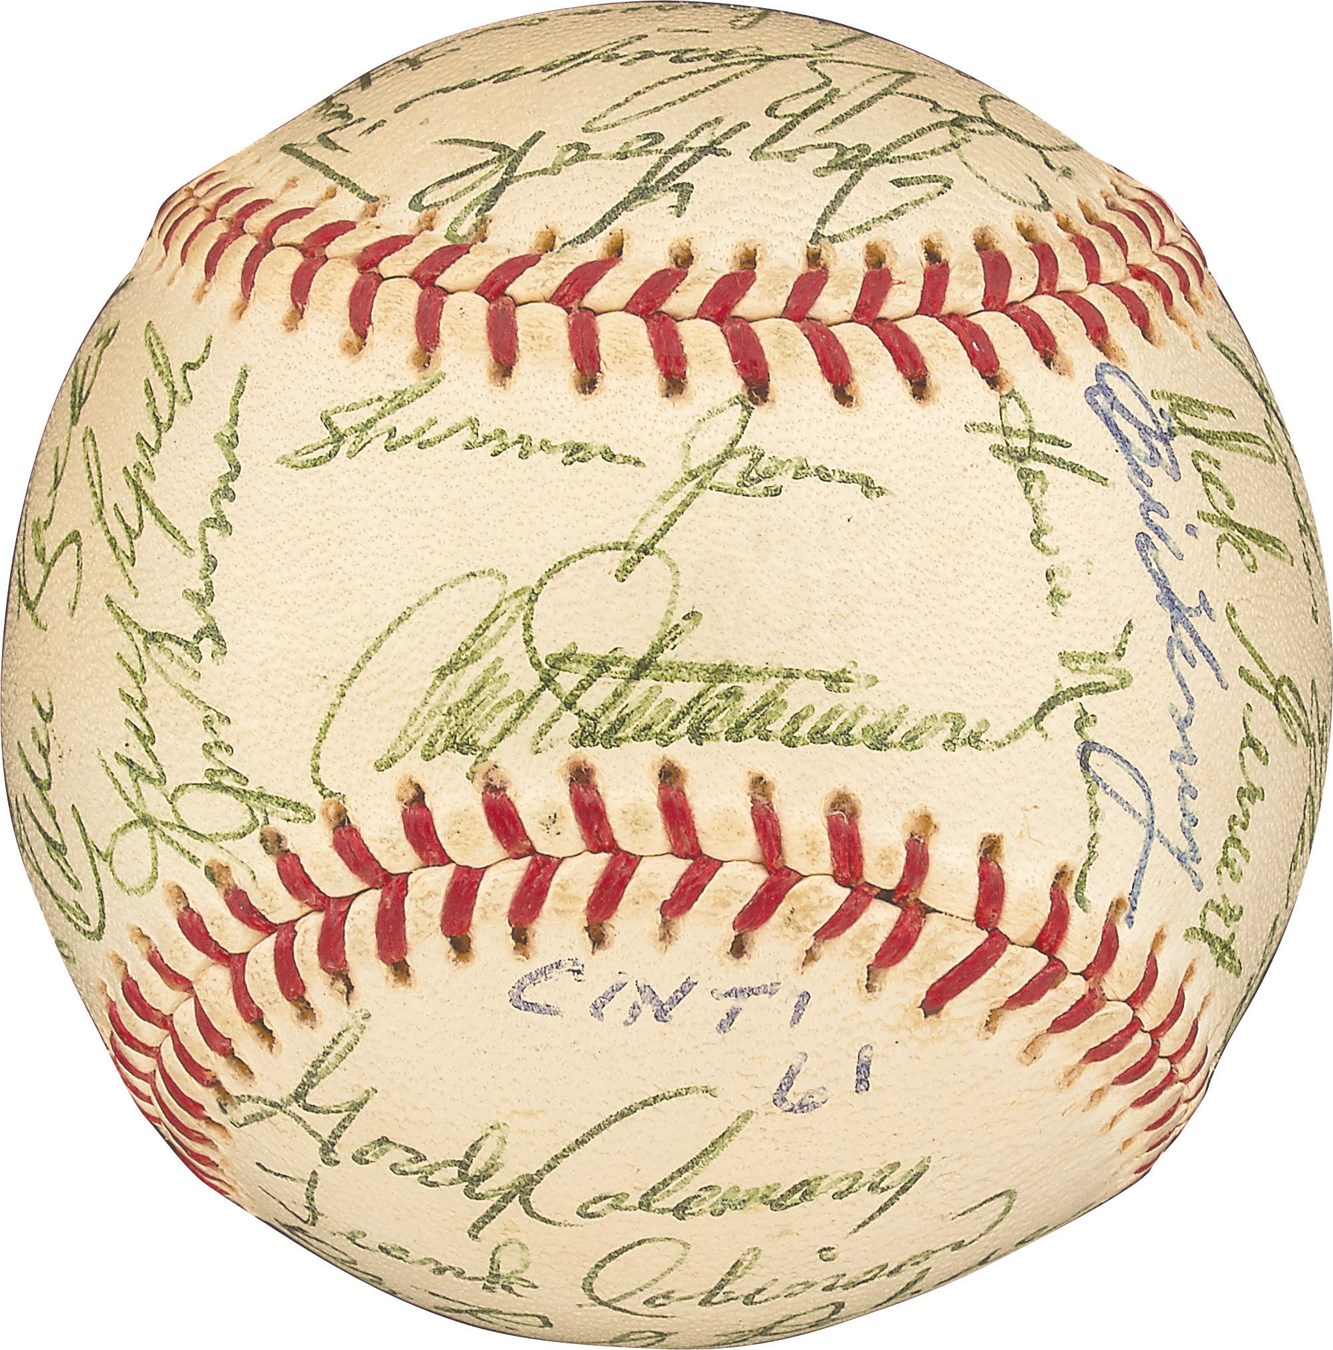 Baseball Autographs - 1961 National League Champion Cincinnati Reds Team-Signed Baseball - PSA/DNA 7.5